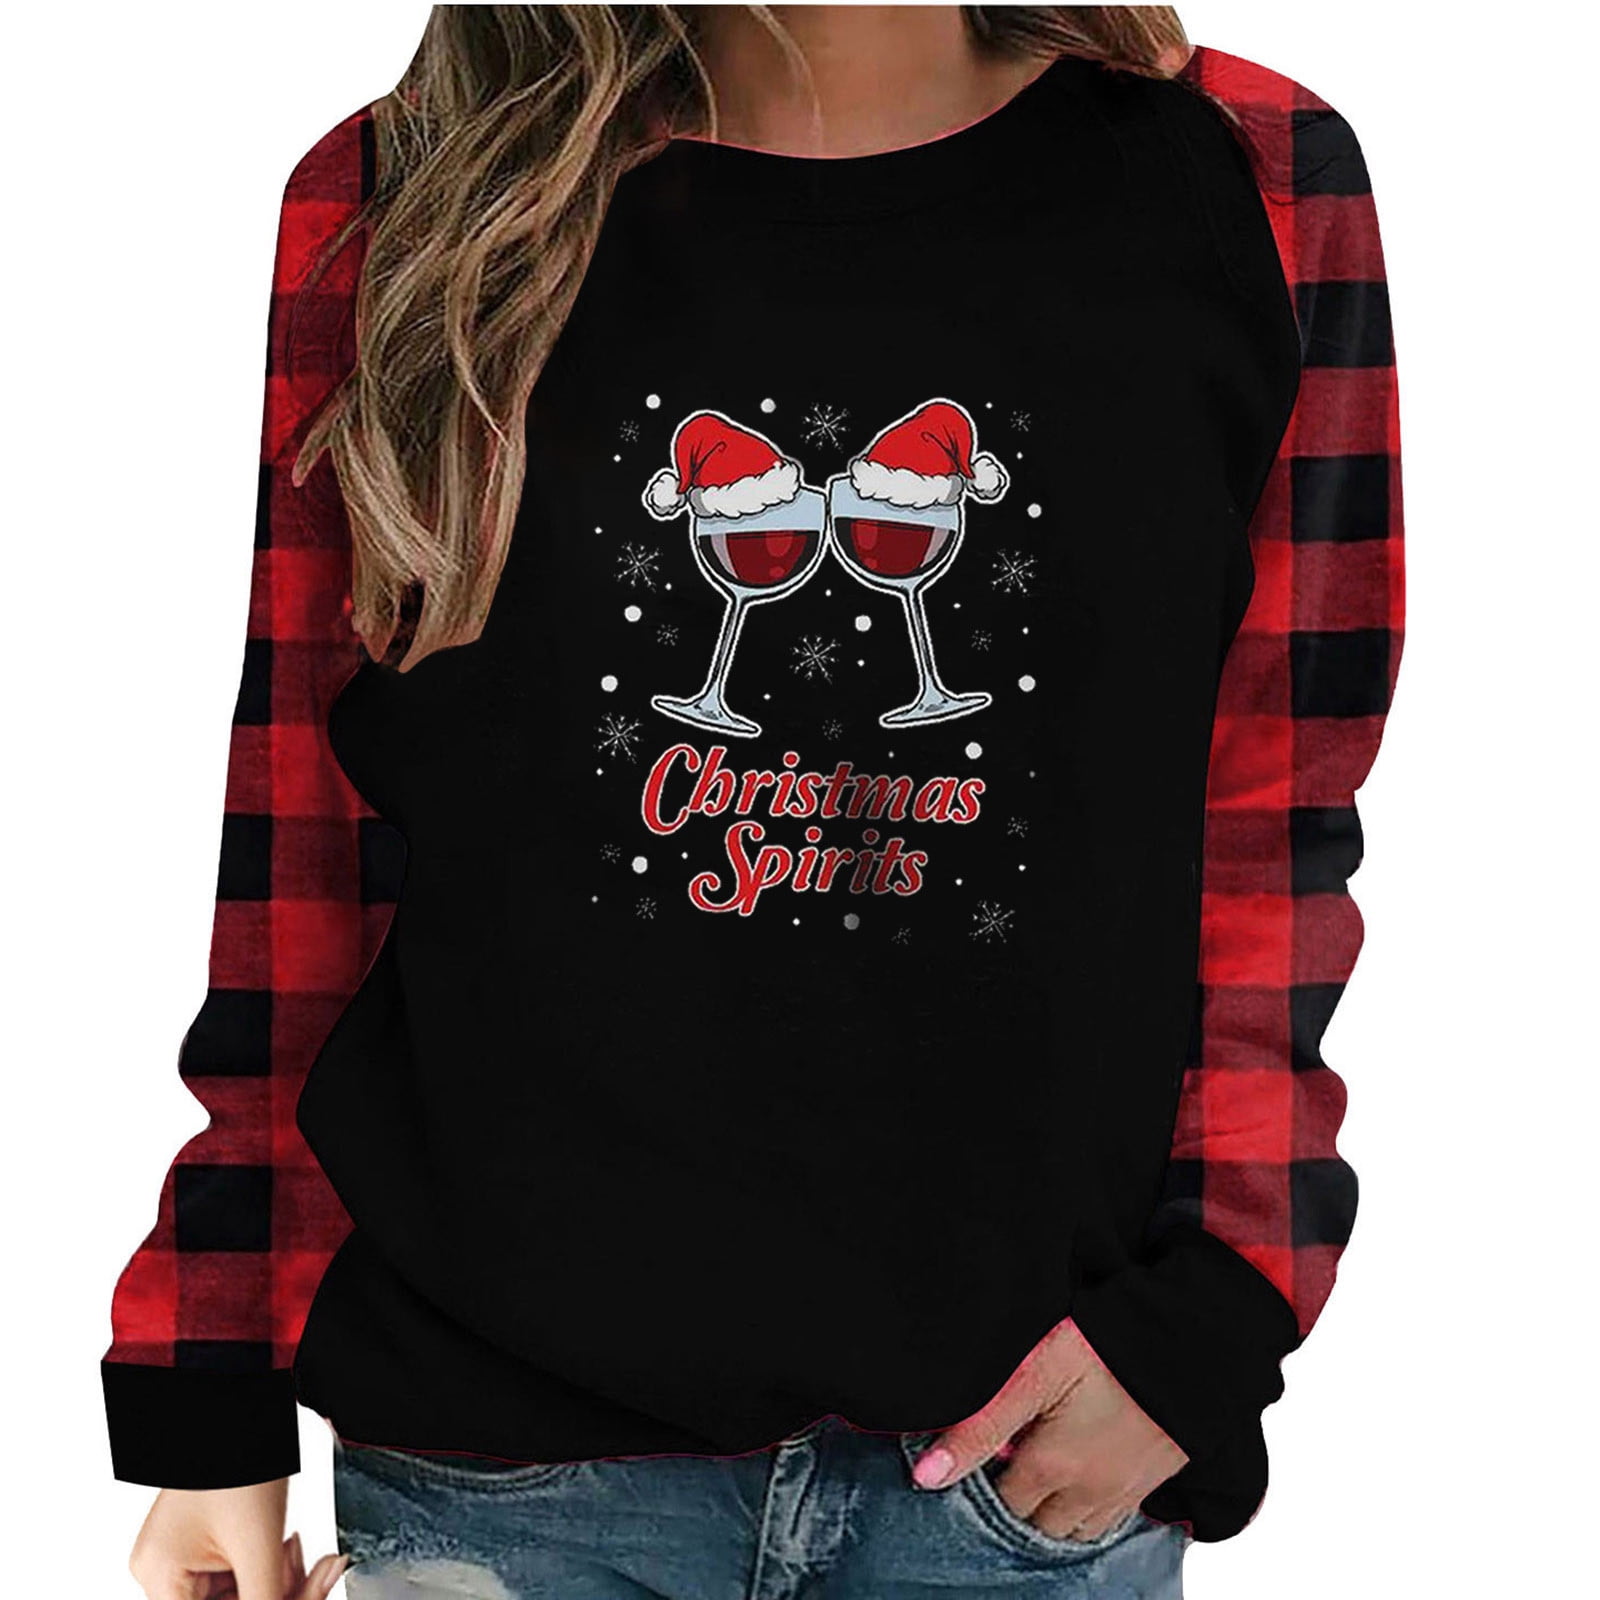 tklpehg Womens Christmas Shirts Red Wine Glass Santa Hat Graphic ...